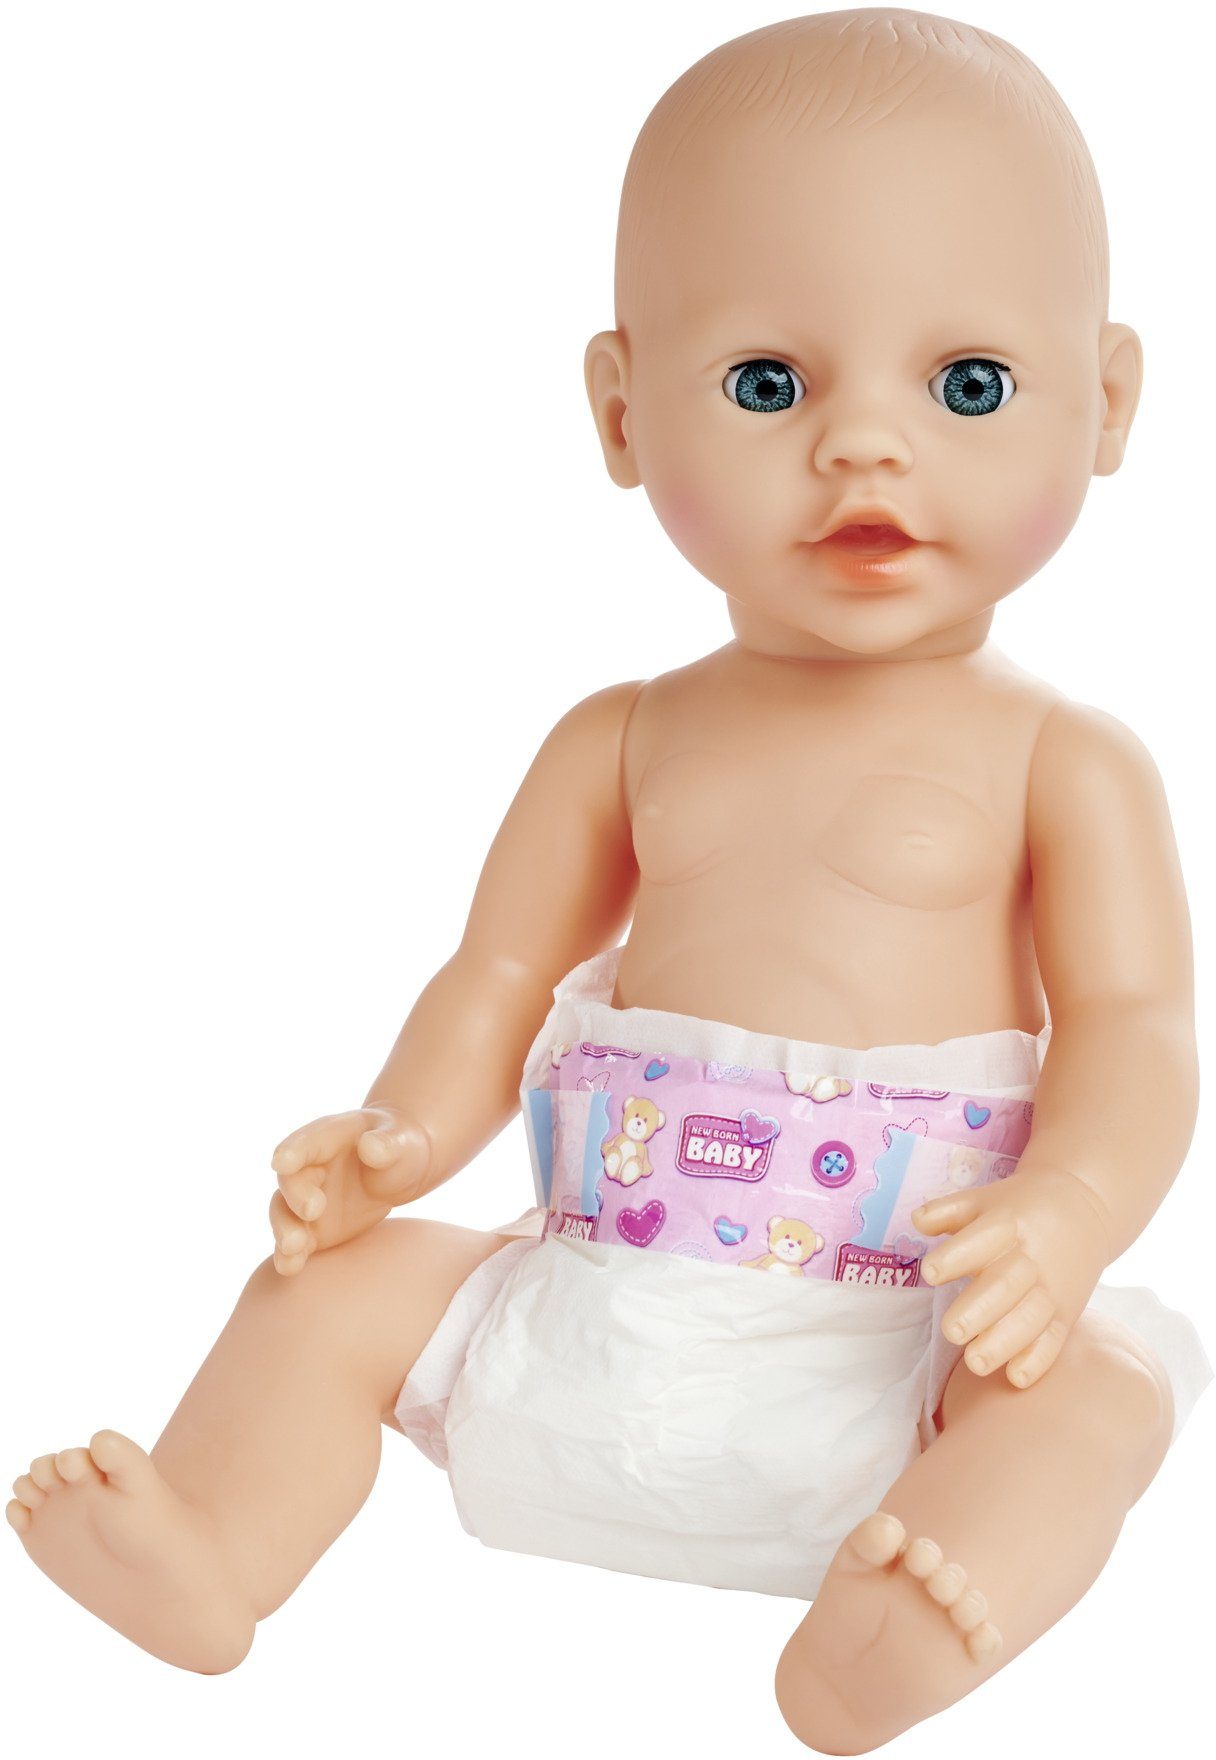 SIMBA cm New Born 38 43 Puppen Windeln 105560019 Zubehör Baby Puppe - Babypuppe alle 5